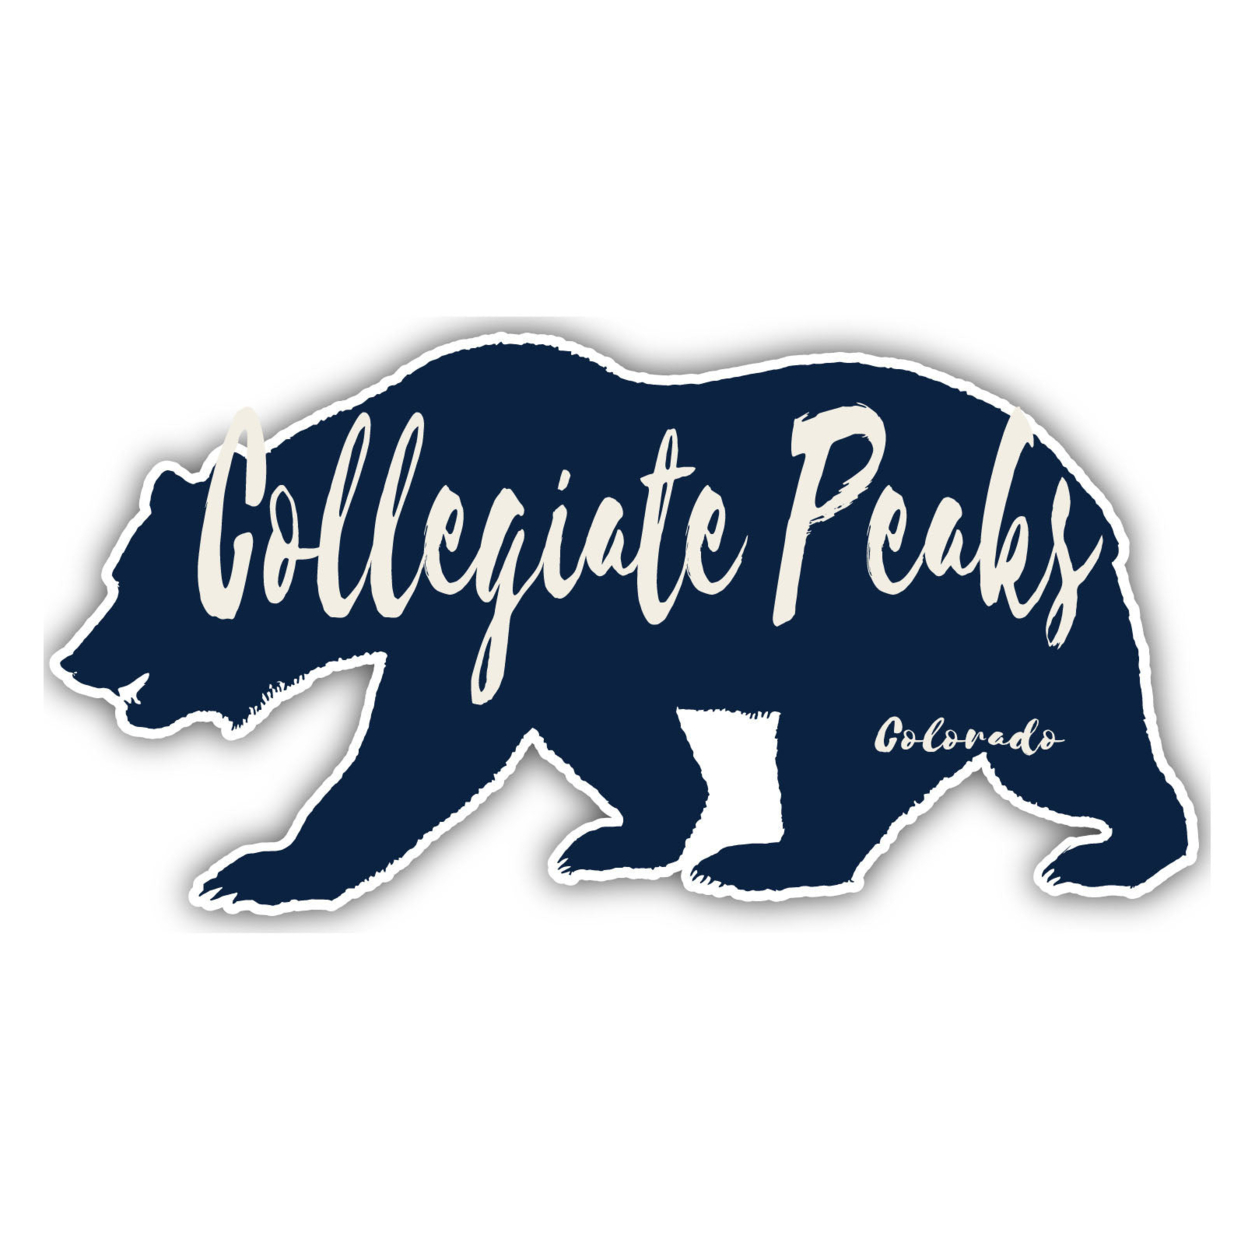 Collegiate Peaks Colorado Souvenir Decorative Stickers (Choose Theme And Size) - Single Unit, 2-Inch, Tent